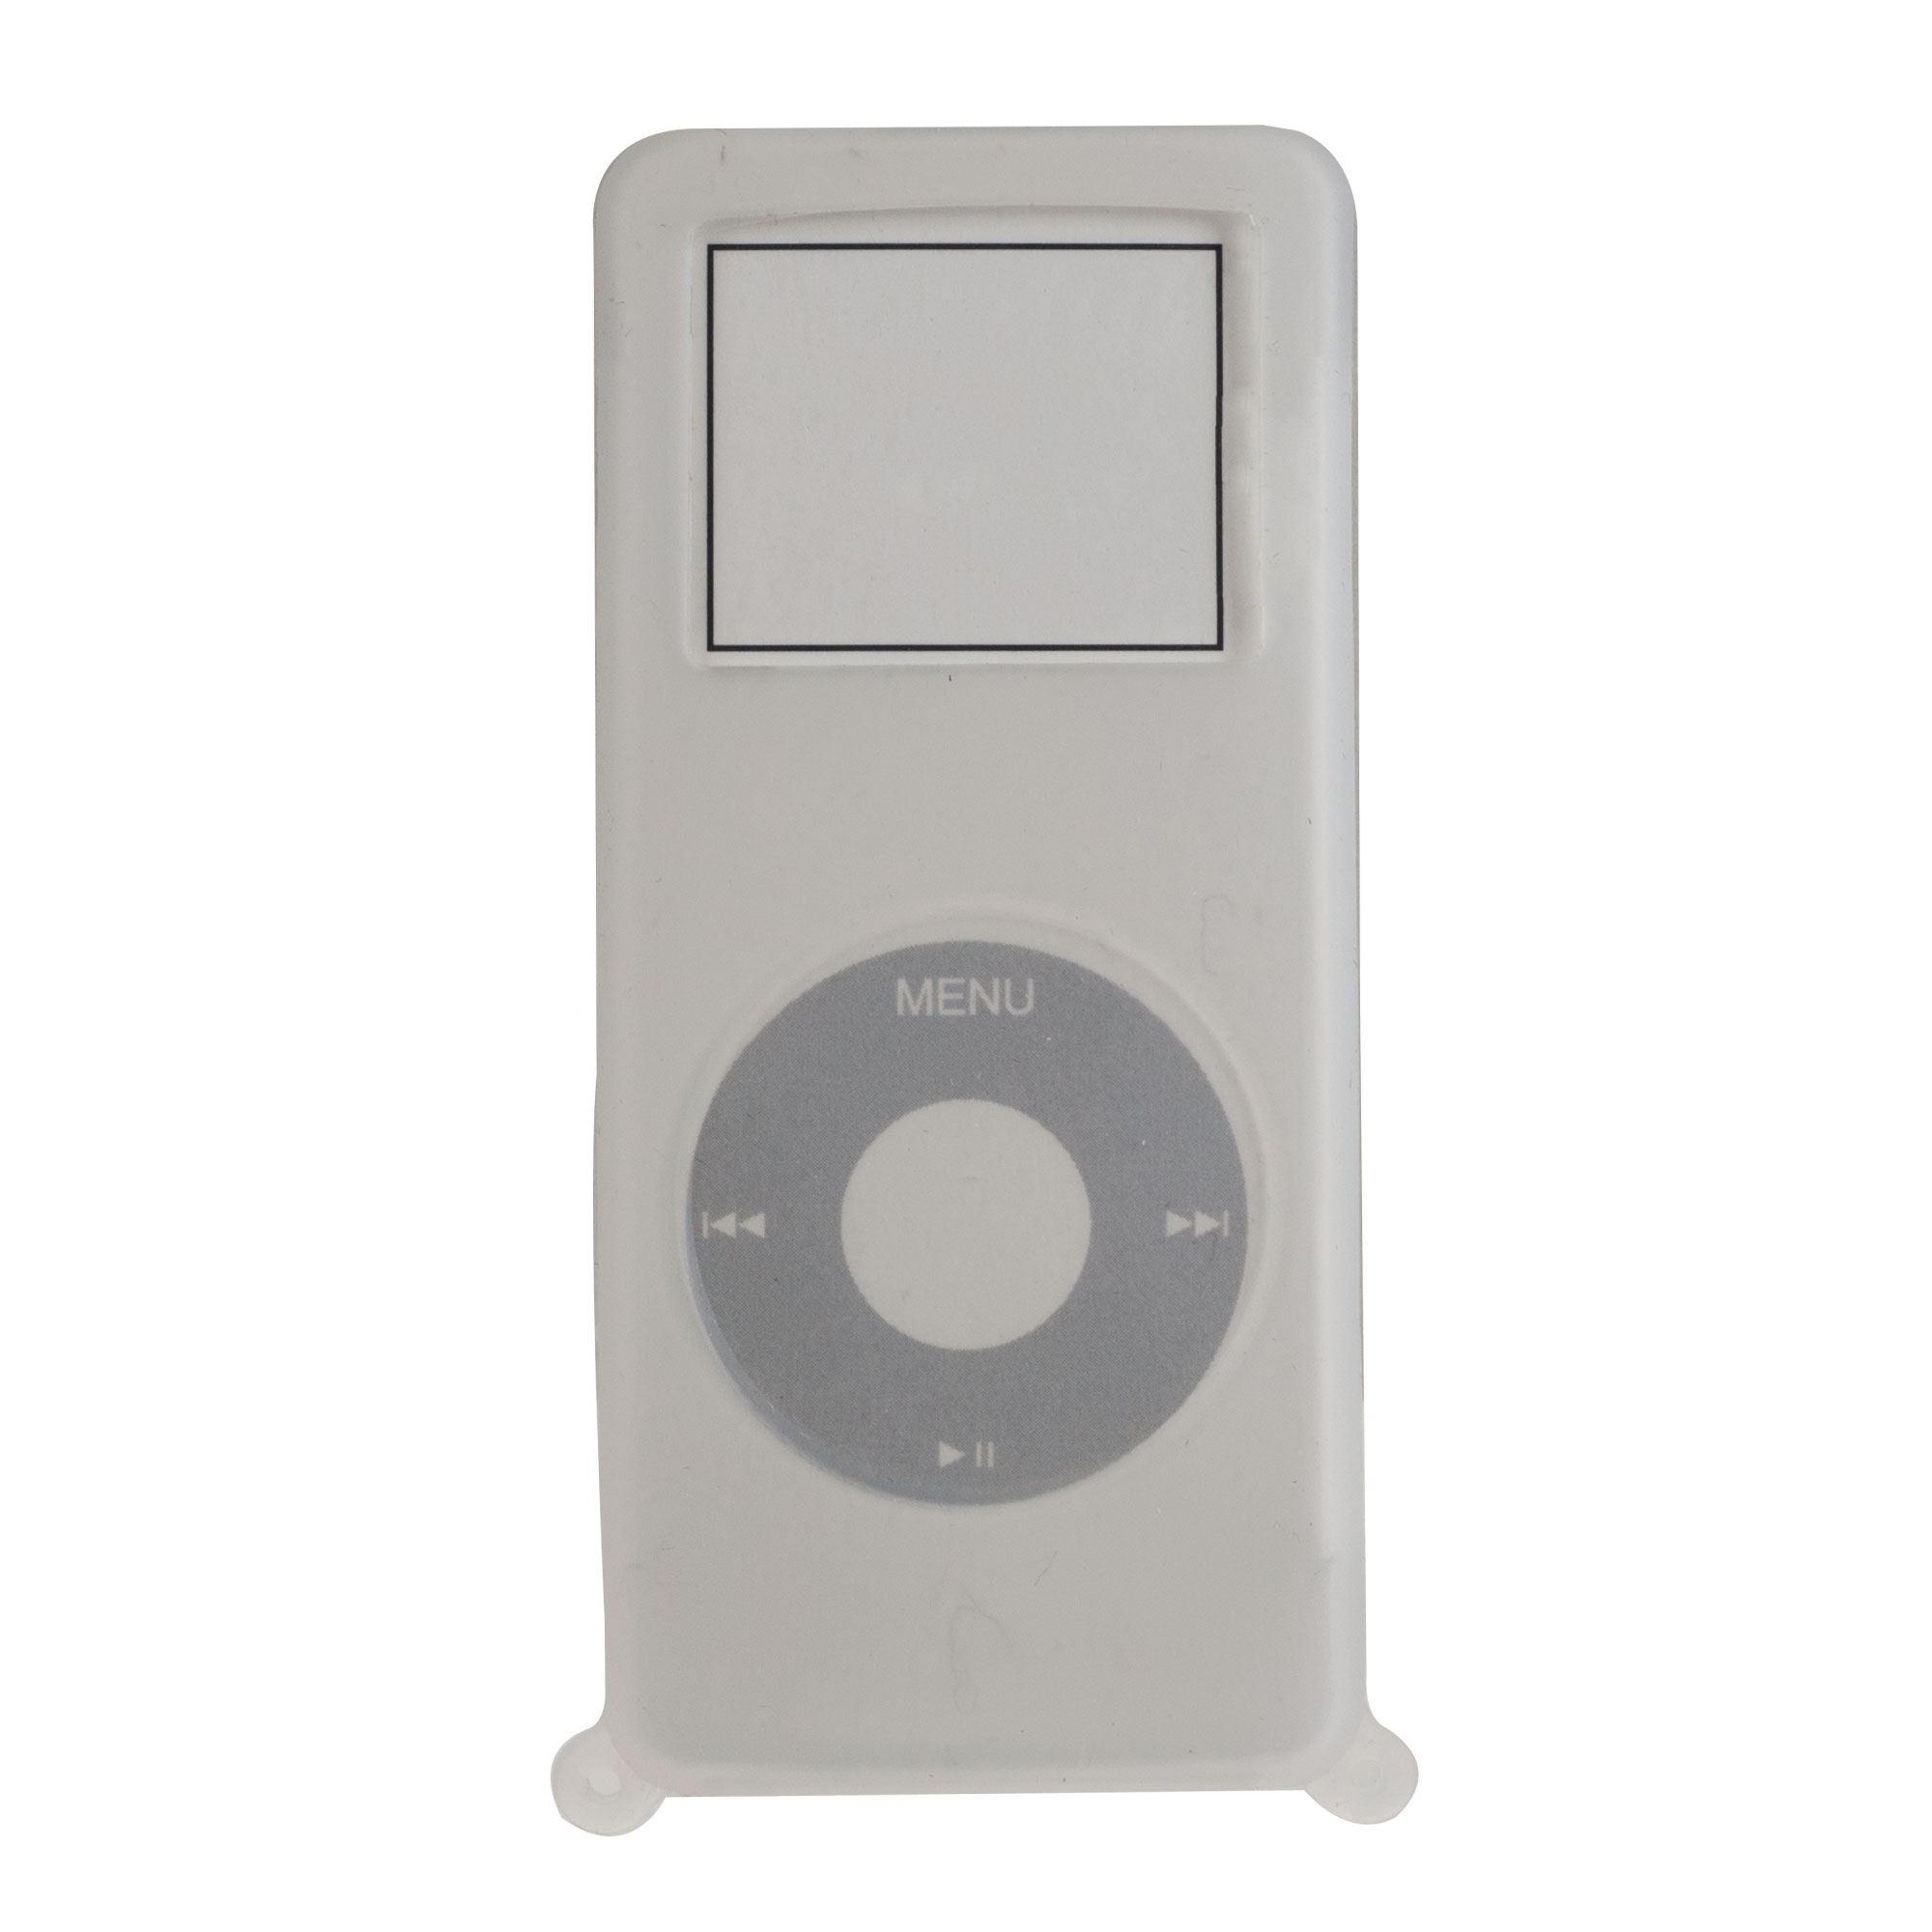 Kinyo Protective Soft case for iPod Nano